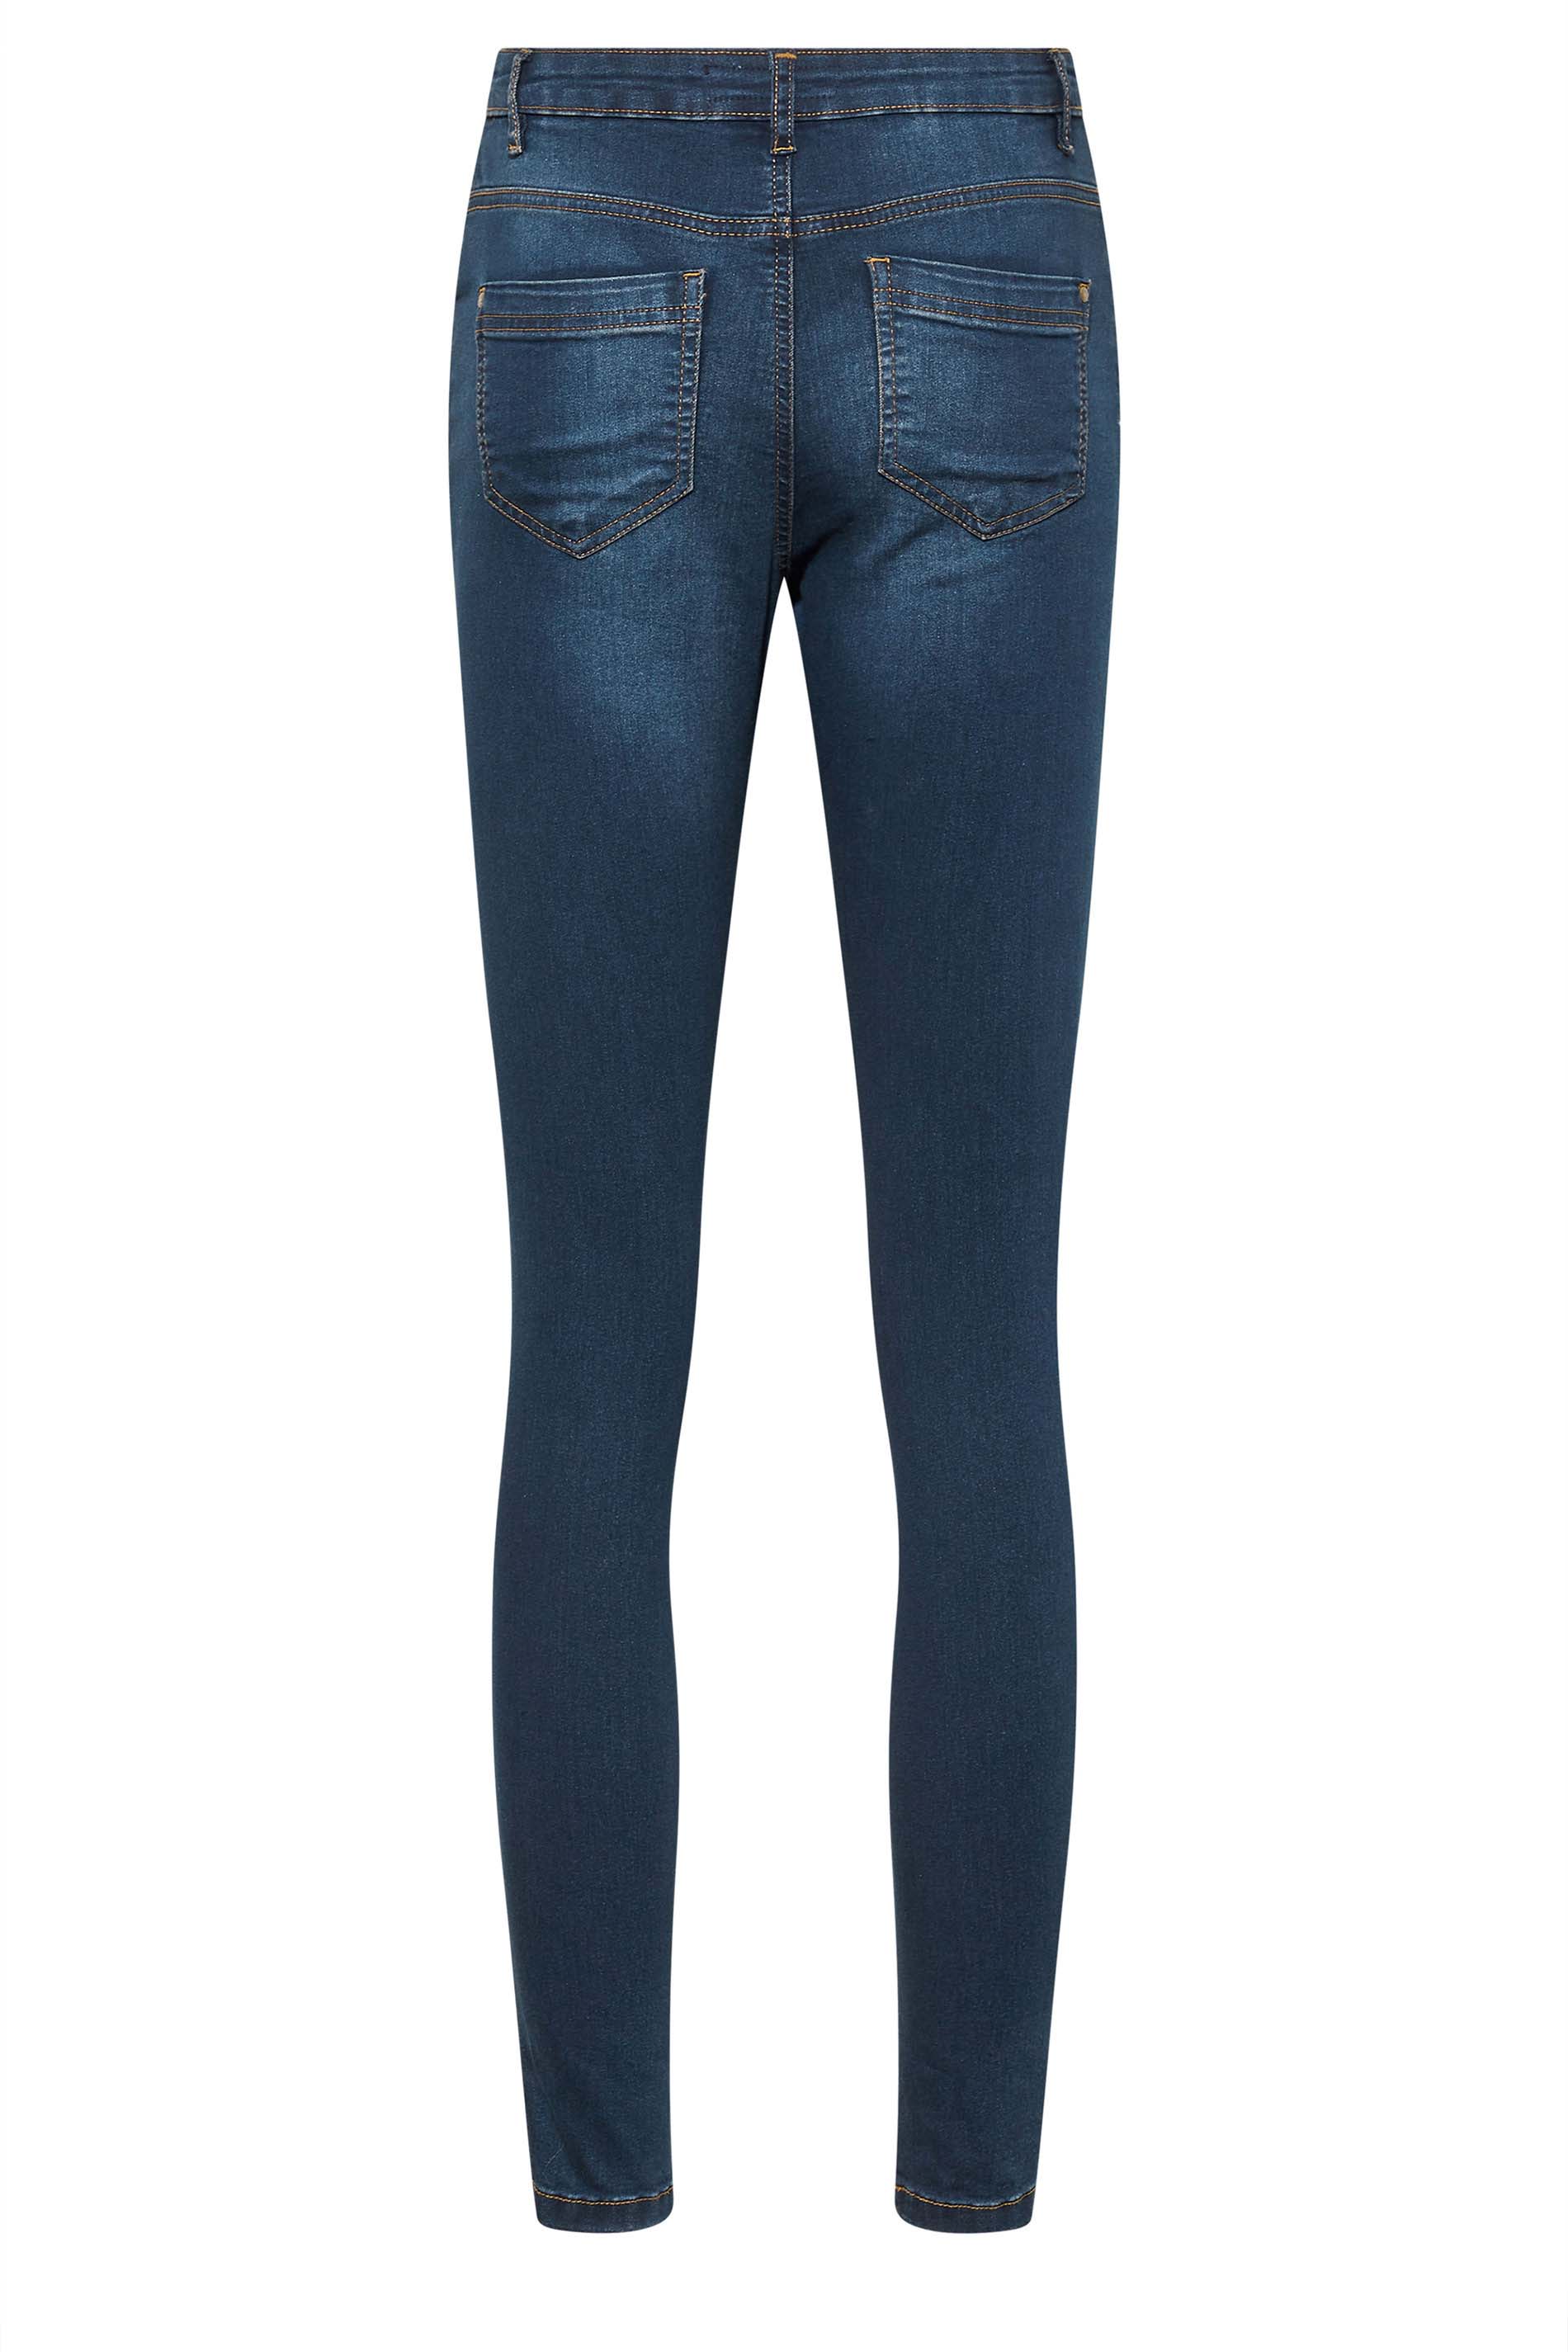 LTS Tall Women's Indigo Blue Skinny Stretch AVA Jeans